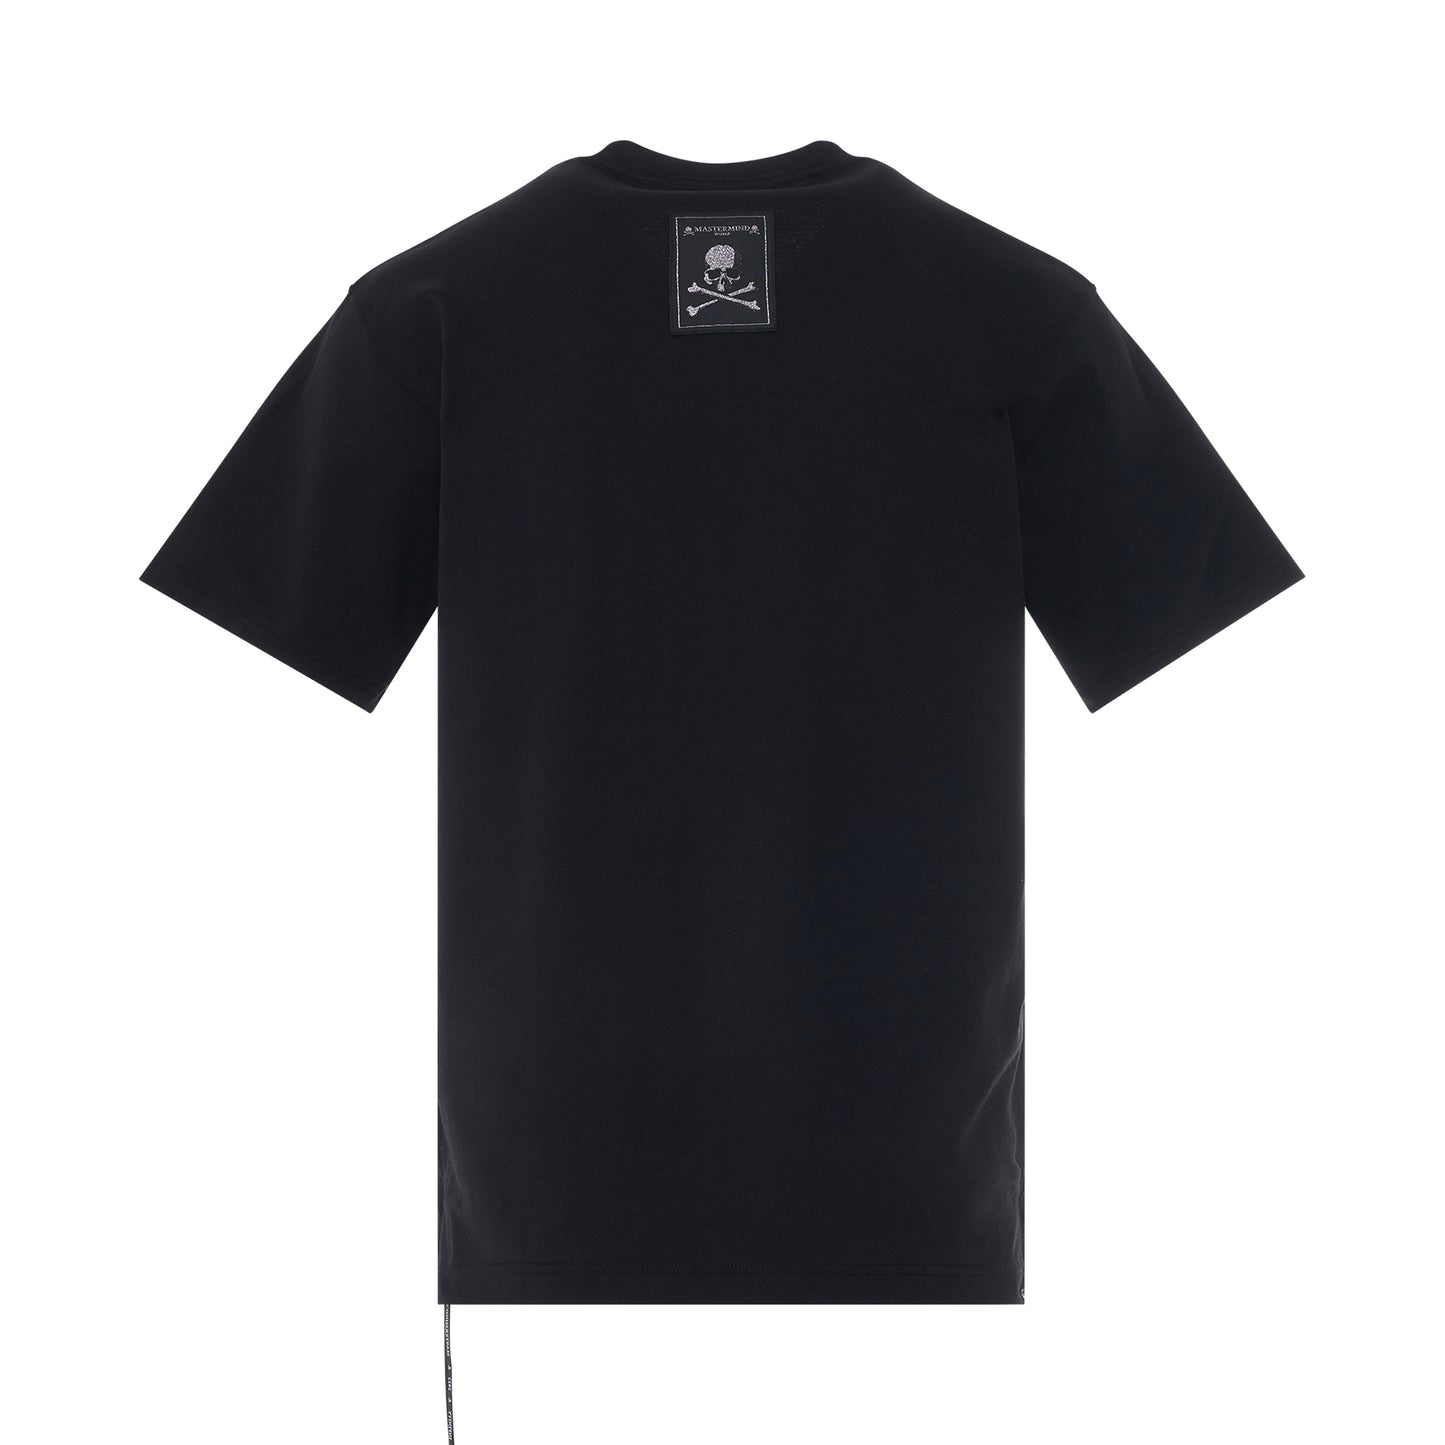 Zip Pocket T-Shirt in Black